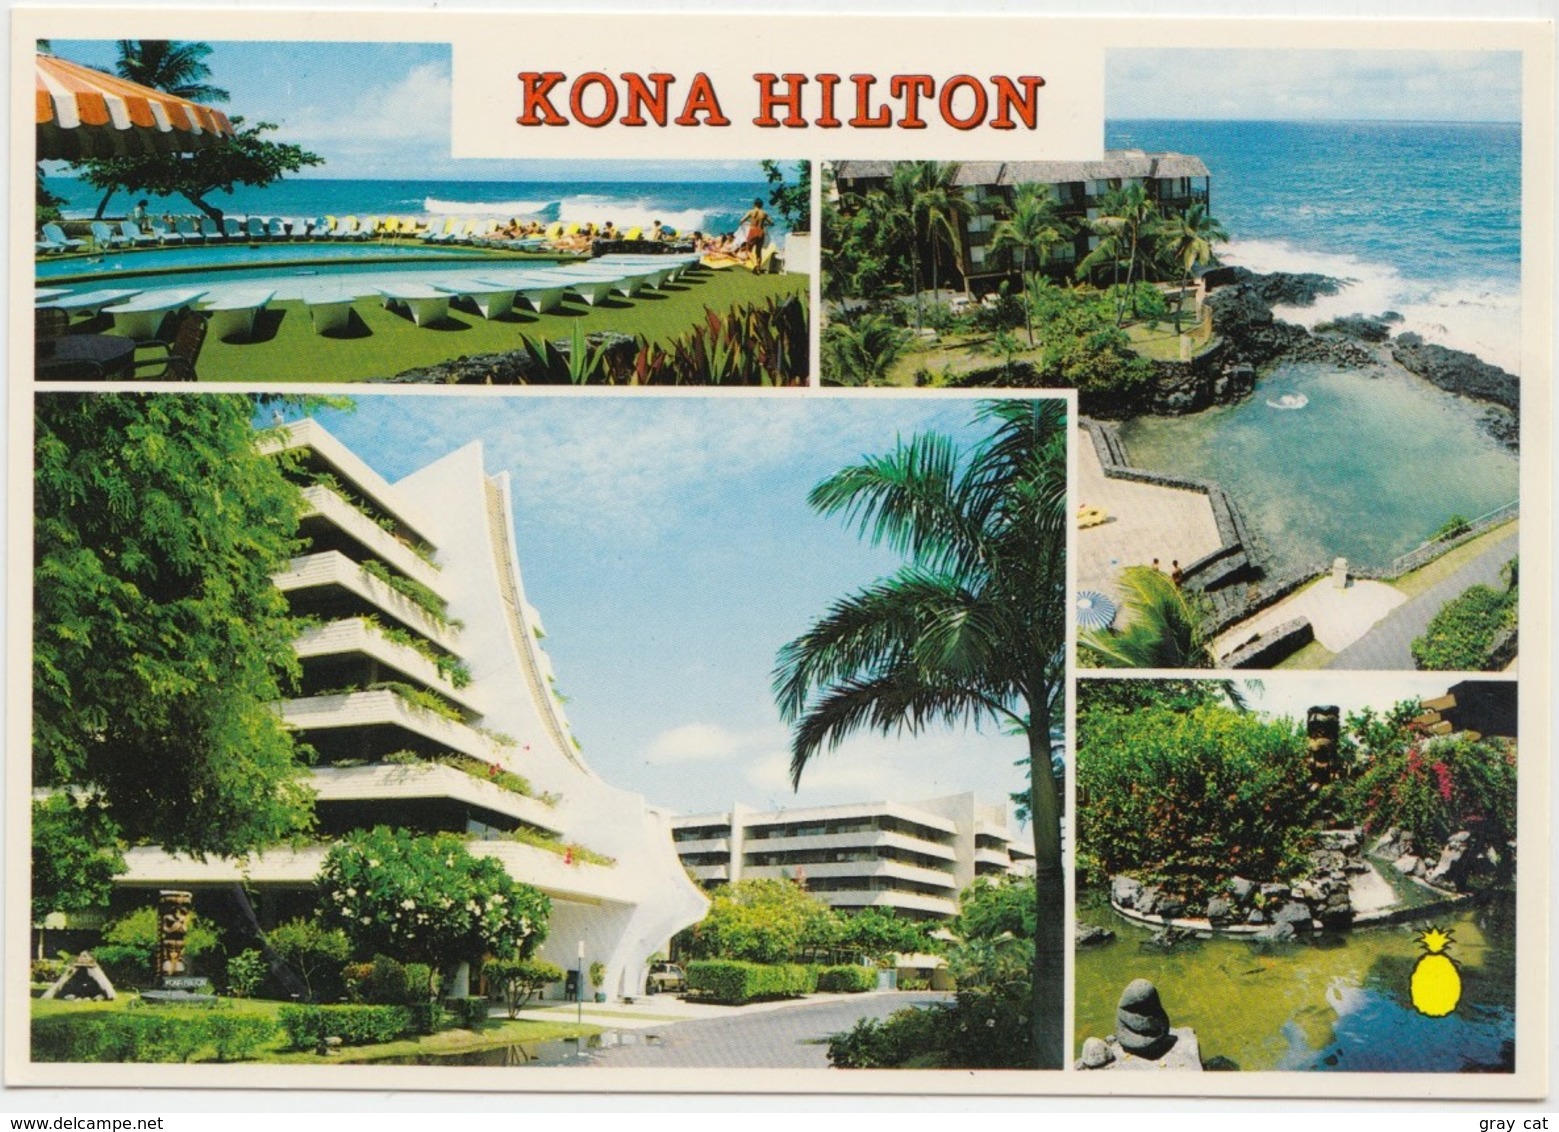 KONA HILTON, Kailua, Island Of Hawaii, Unused Postcard [21751] - Big Island Of Hawaii